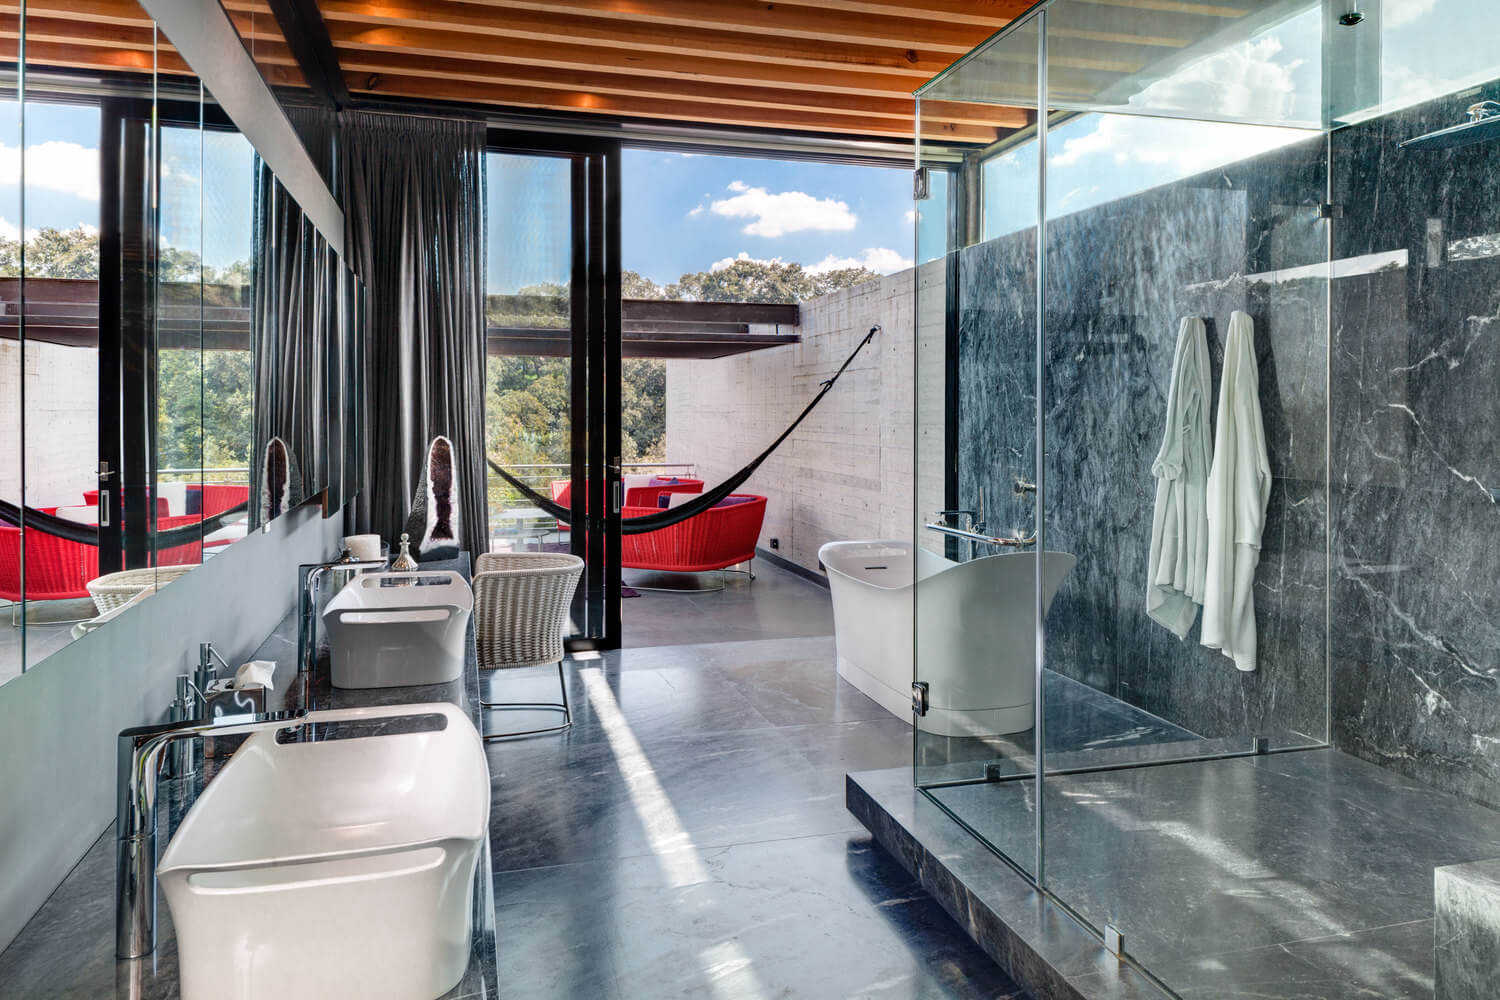 Casa no bosque na Cidade do México por Grupoarquitectura 030 Banheiro + Banheira + Vidros